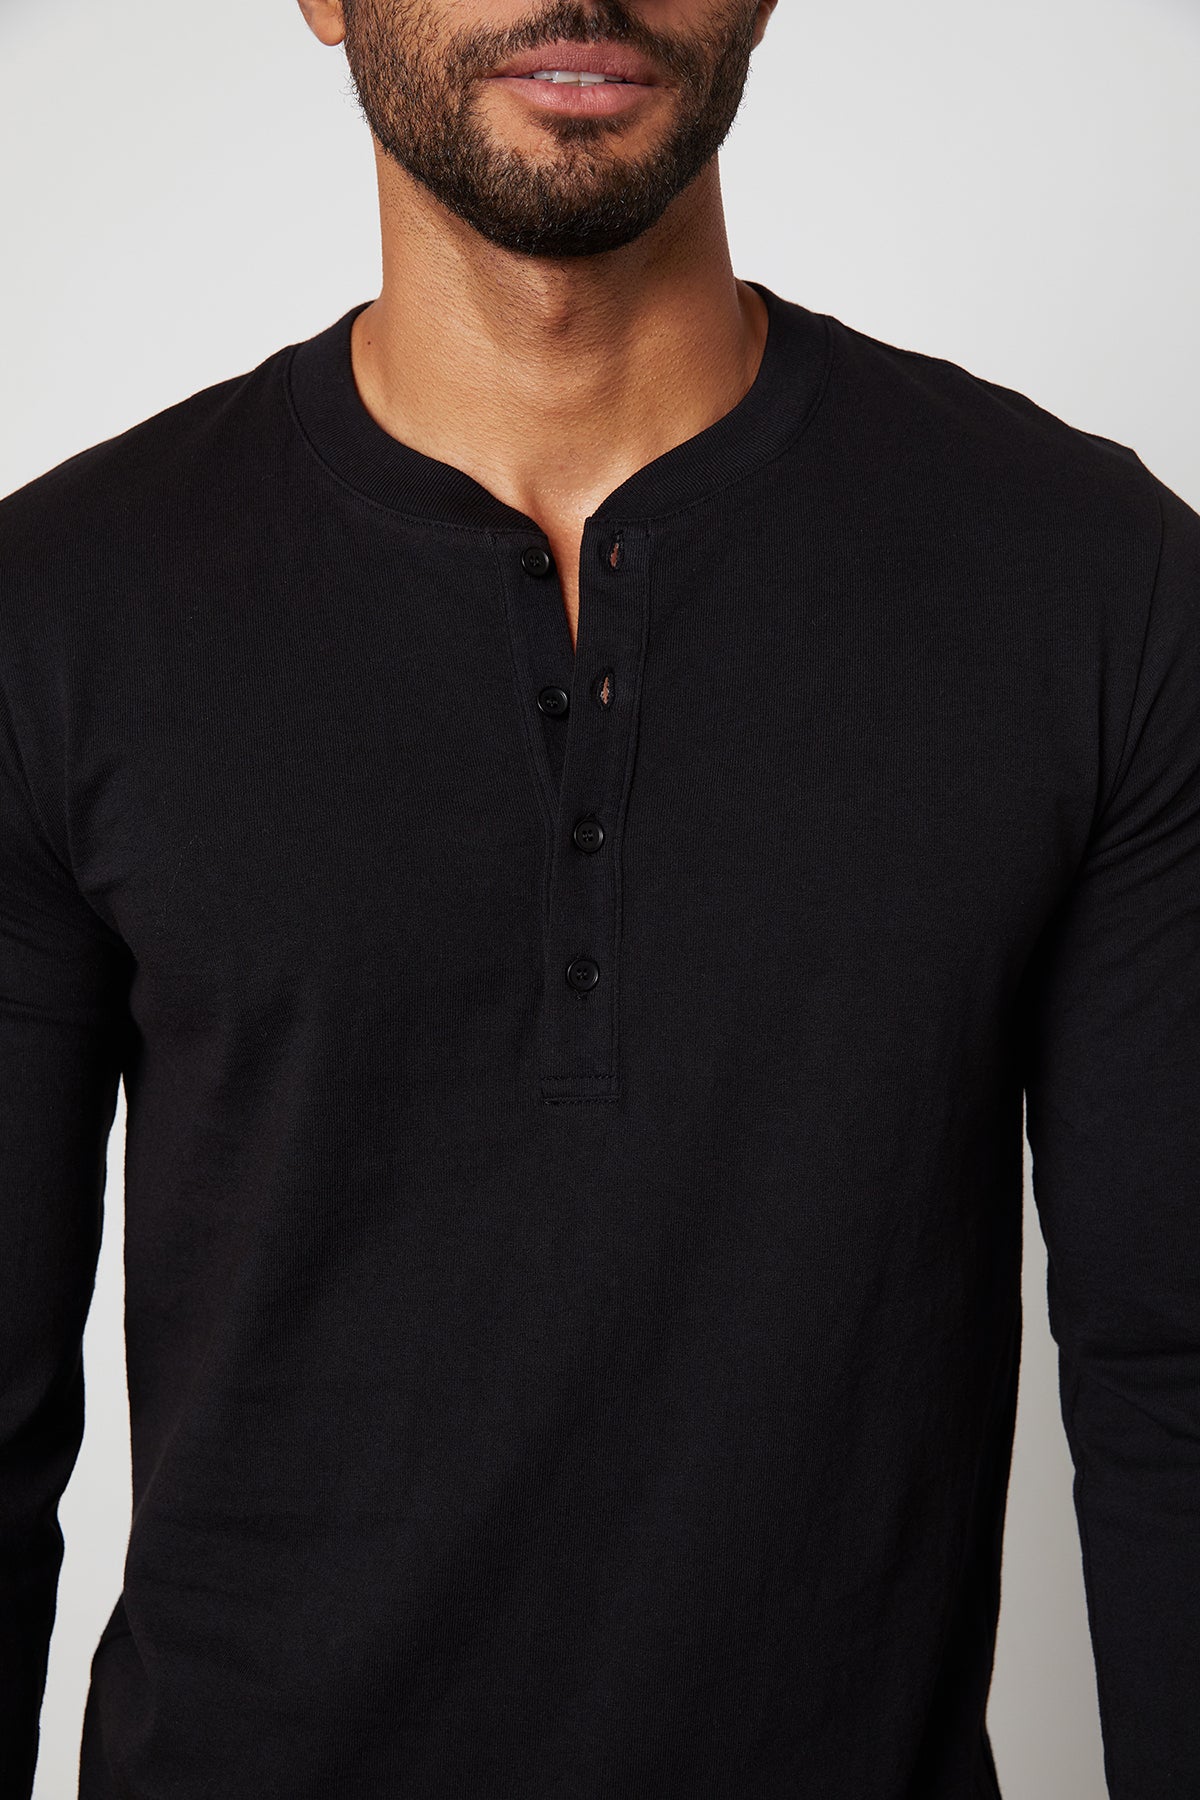   brad in black front shirt detail  